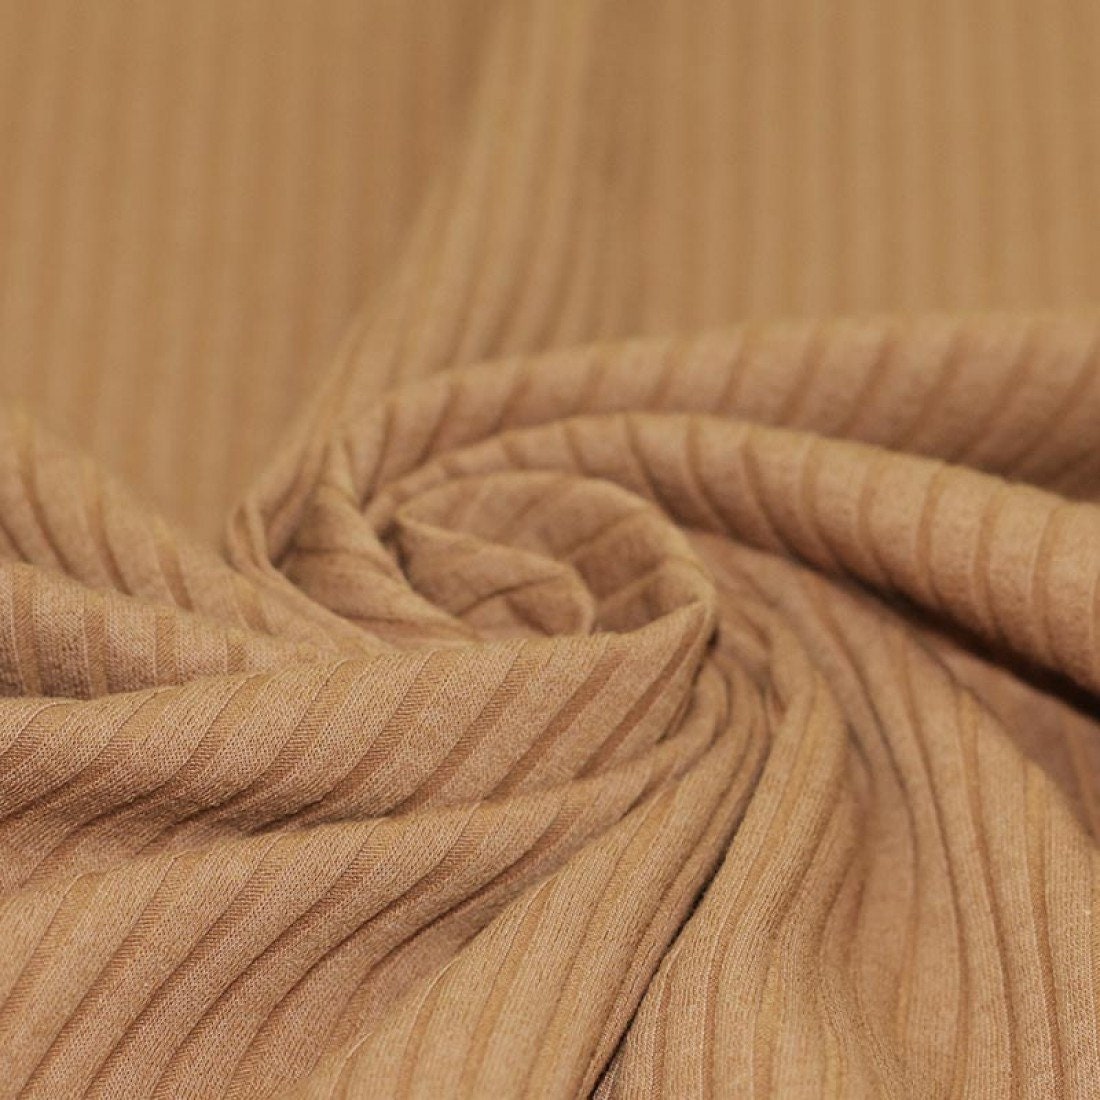 100 Percent Cotton Knit Fabric -  Canada